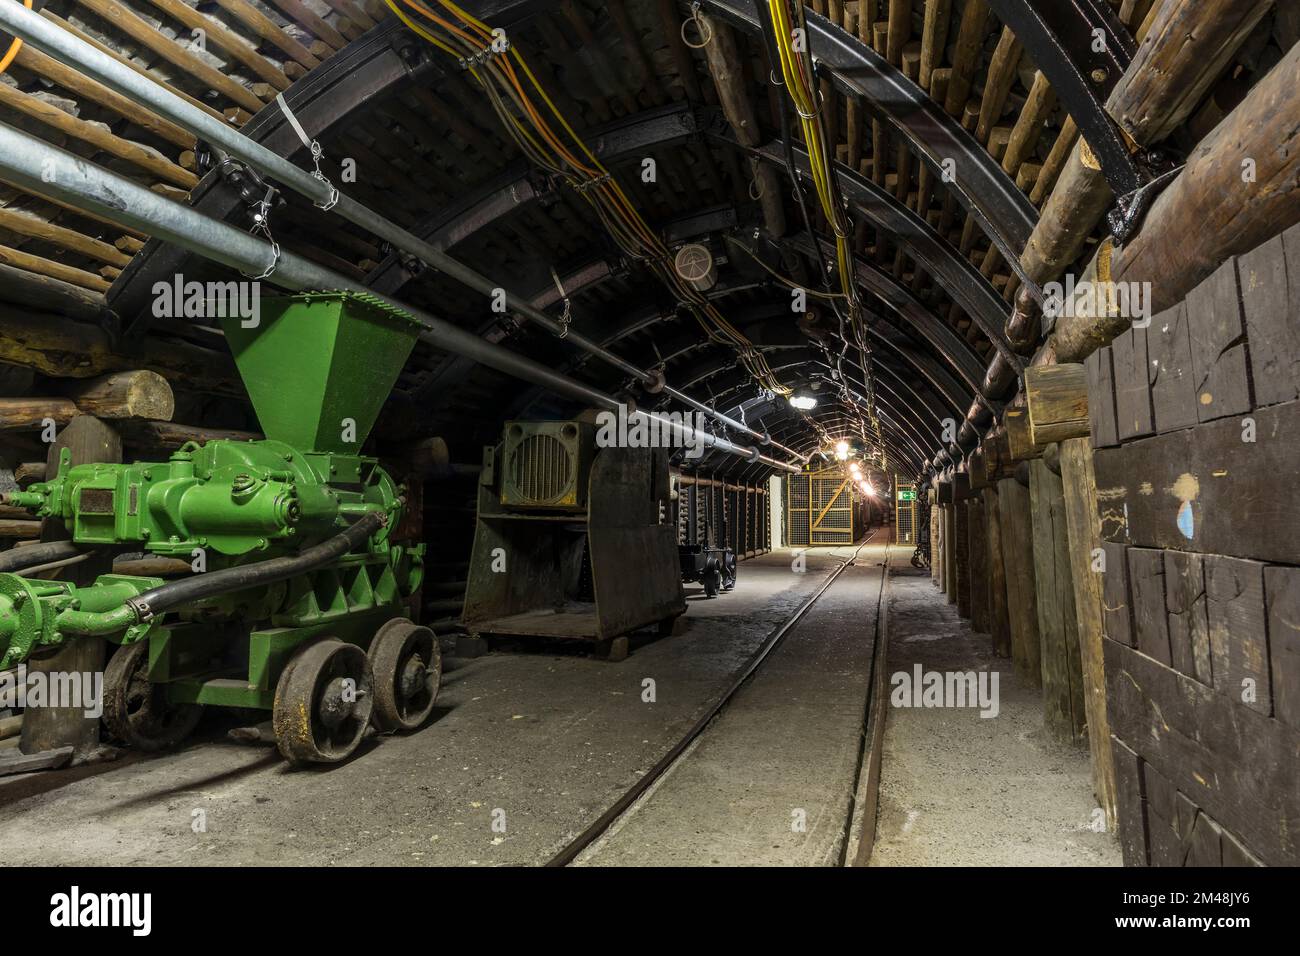 Tunnel of a historic coal mine. Stock Photo